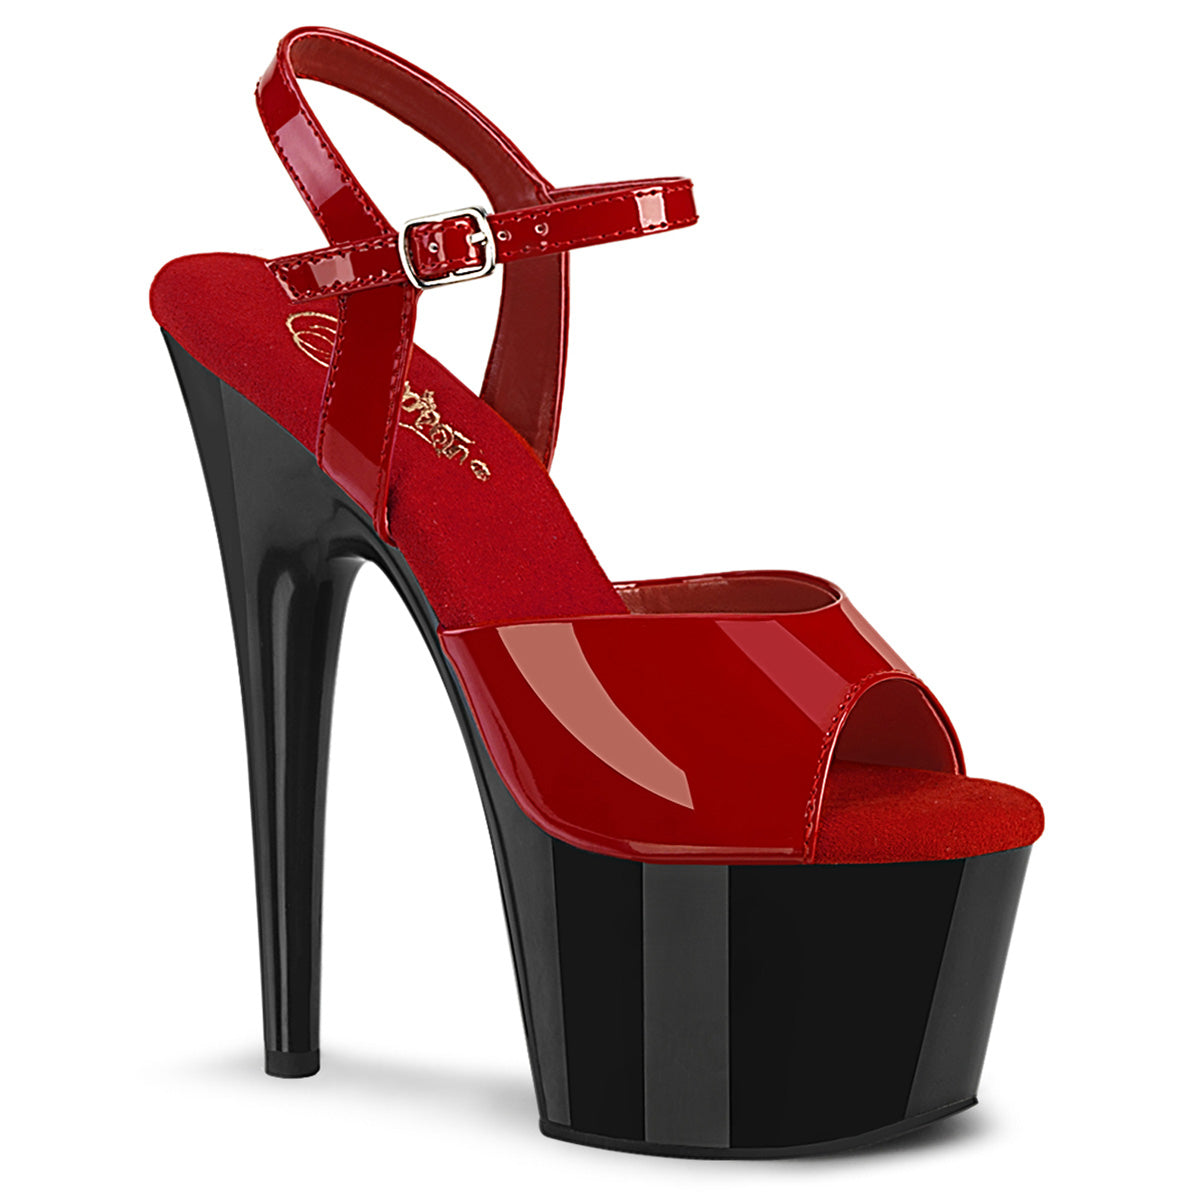 Pleaser ADORE-709 Red Pat 7 Inch (178mm) Heel, 2 3/4 Inch (70mm) Platform Ankle Strap Sandal